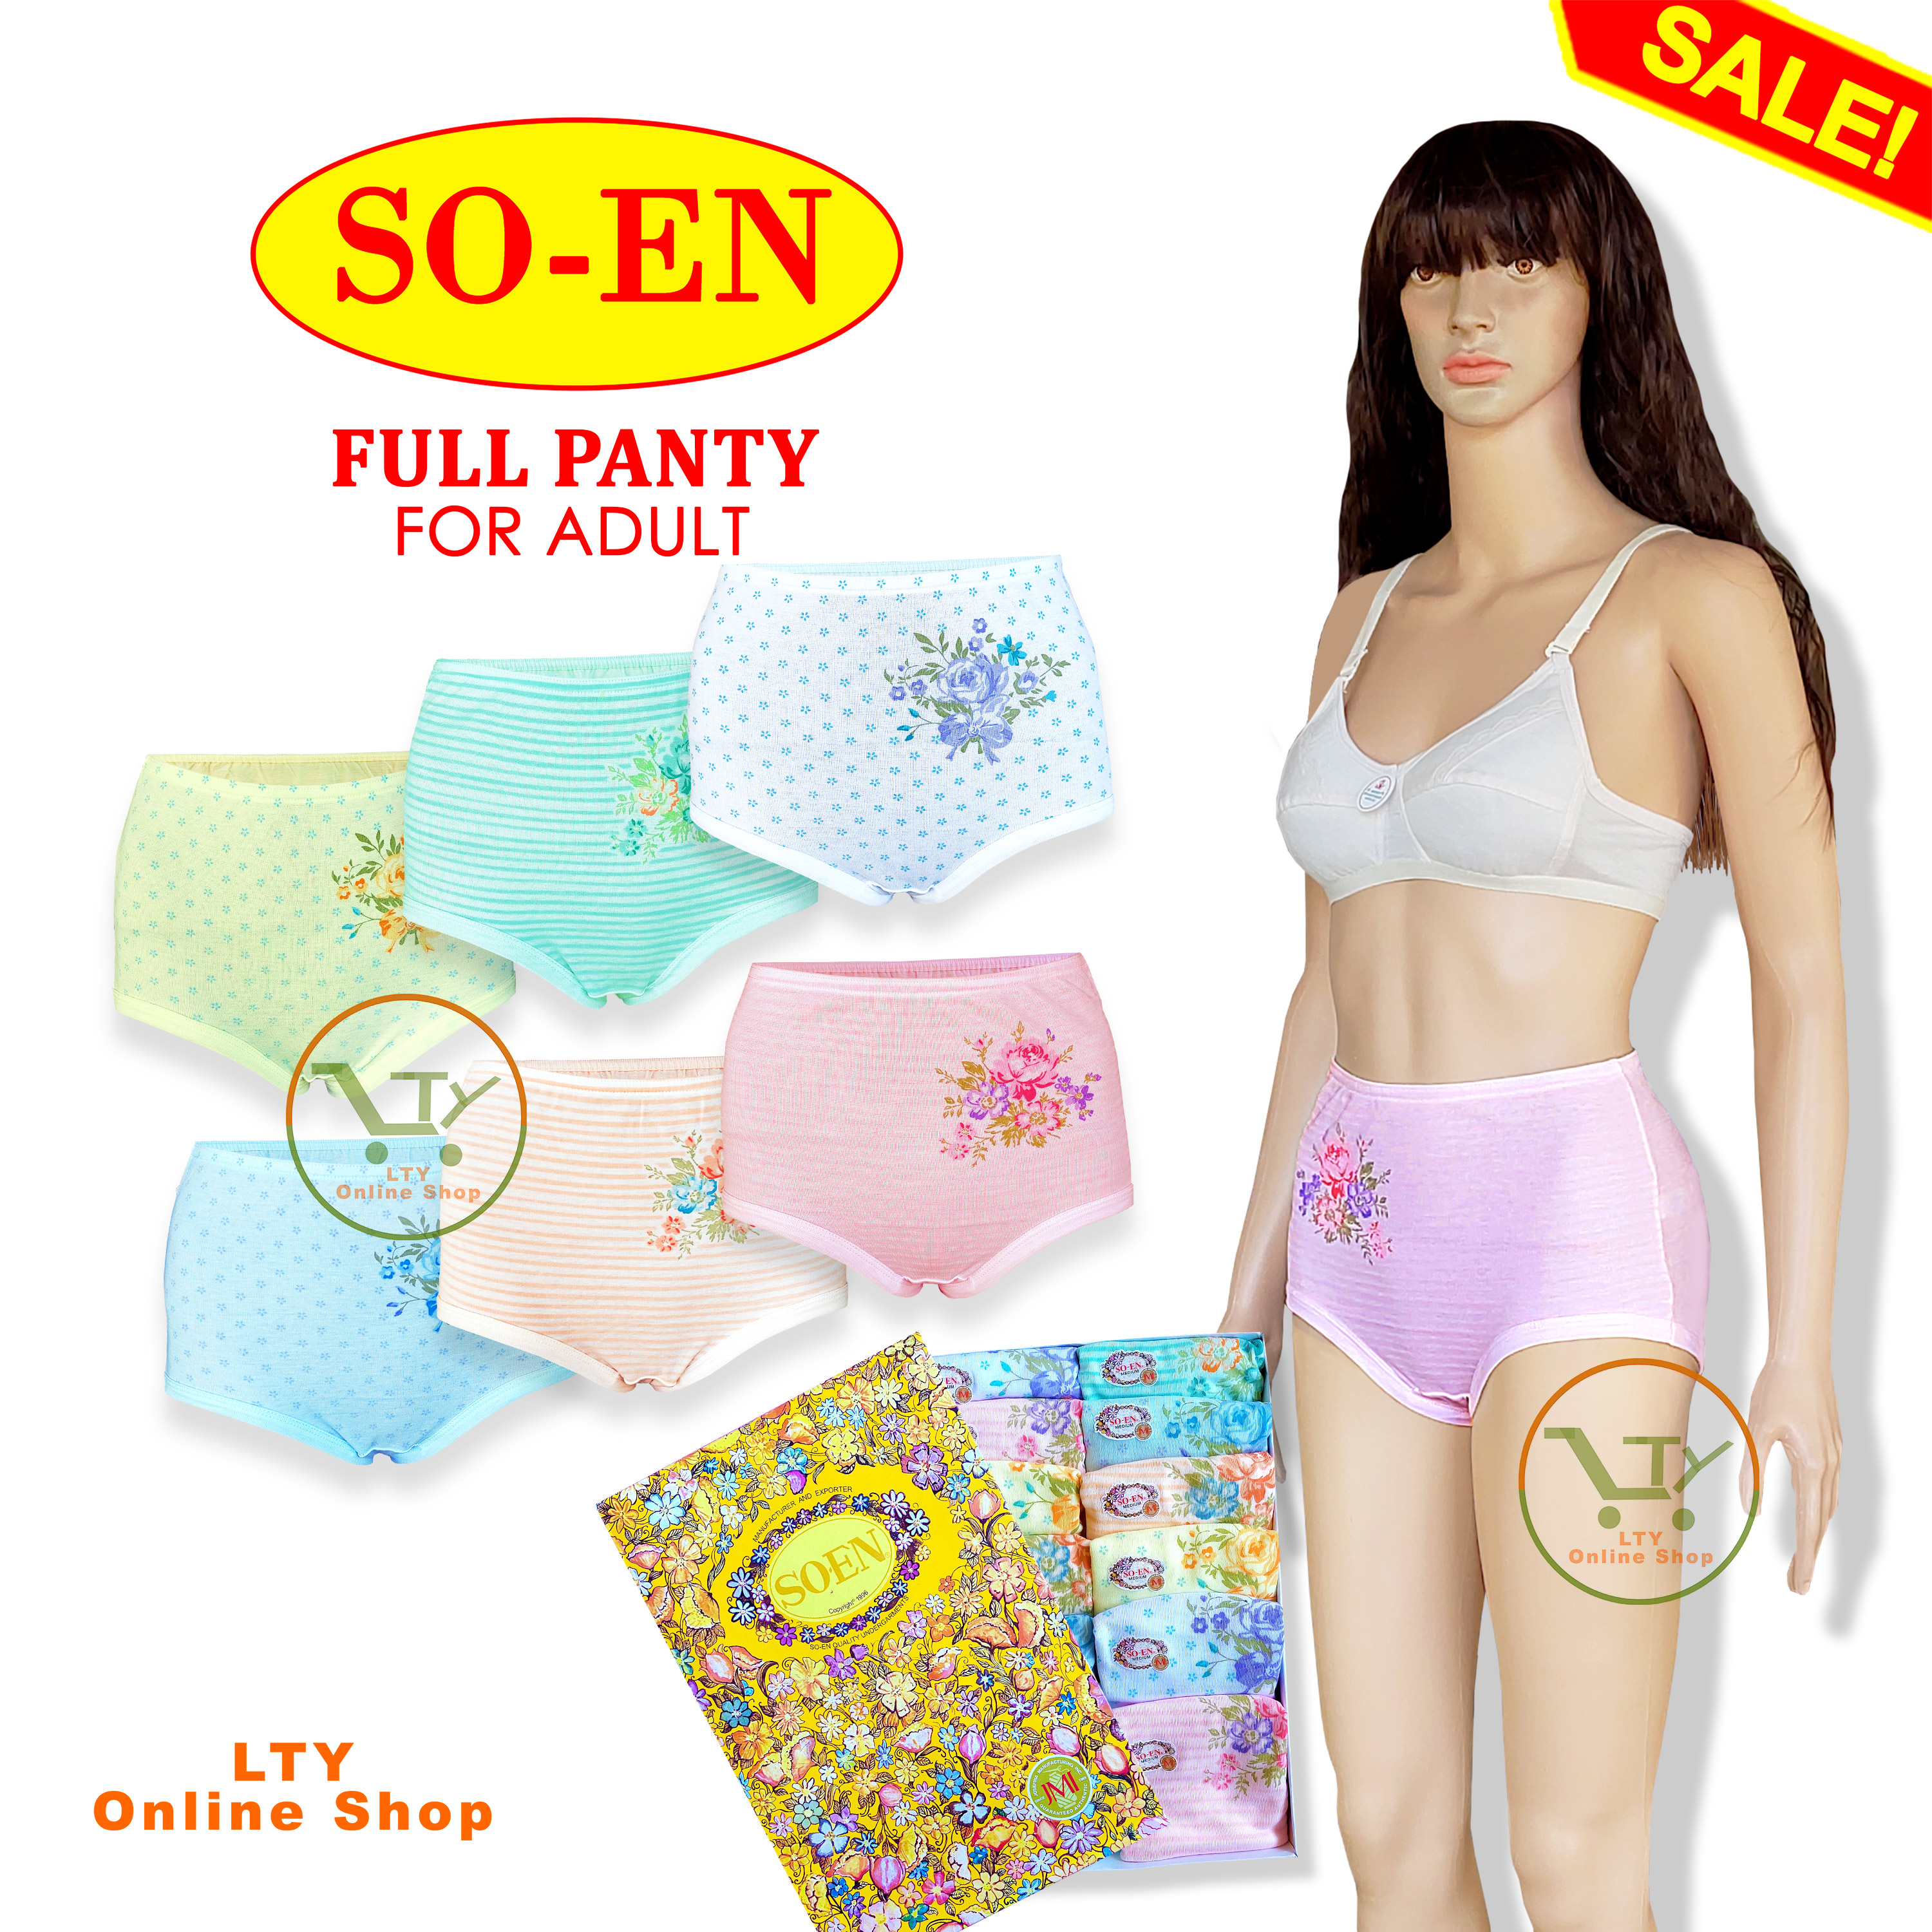 Buy Soen Panty 12 online